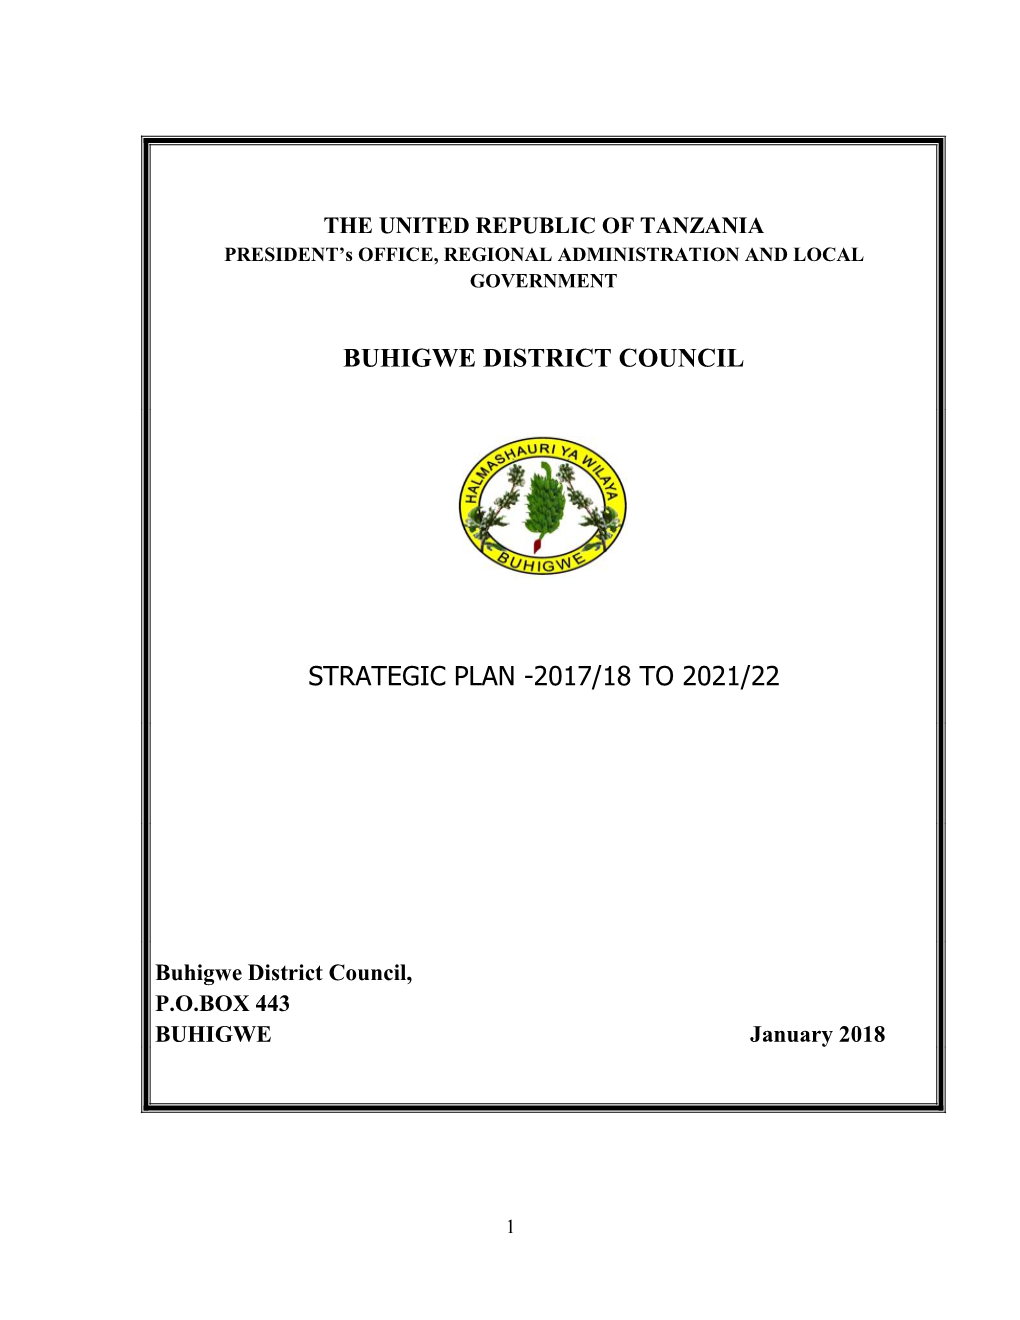 Buhigwe District Council Strategic Plan -2017/18 To